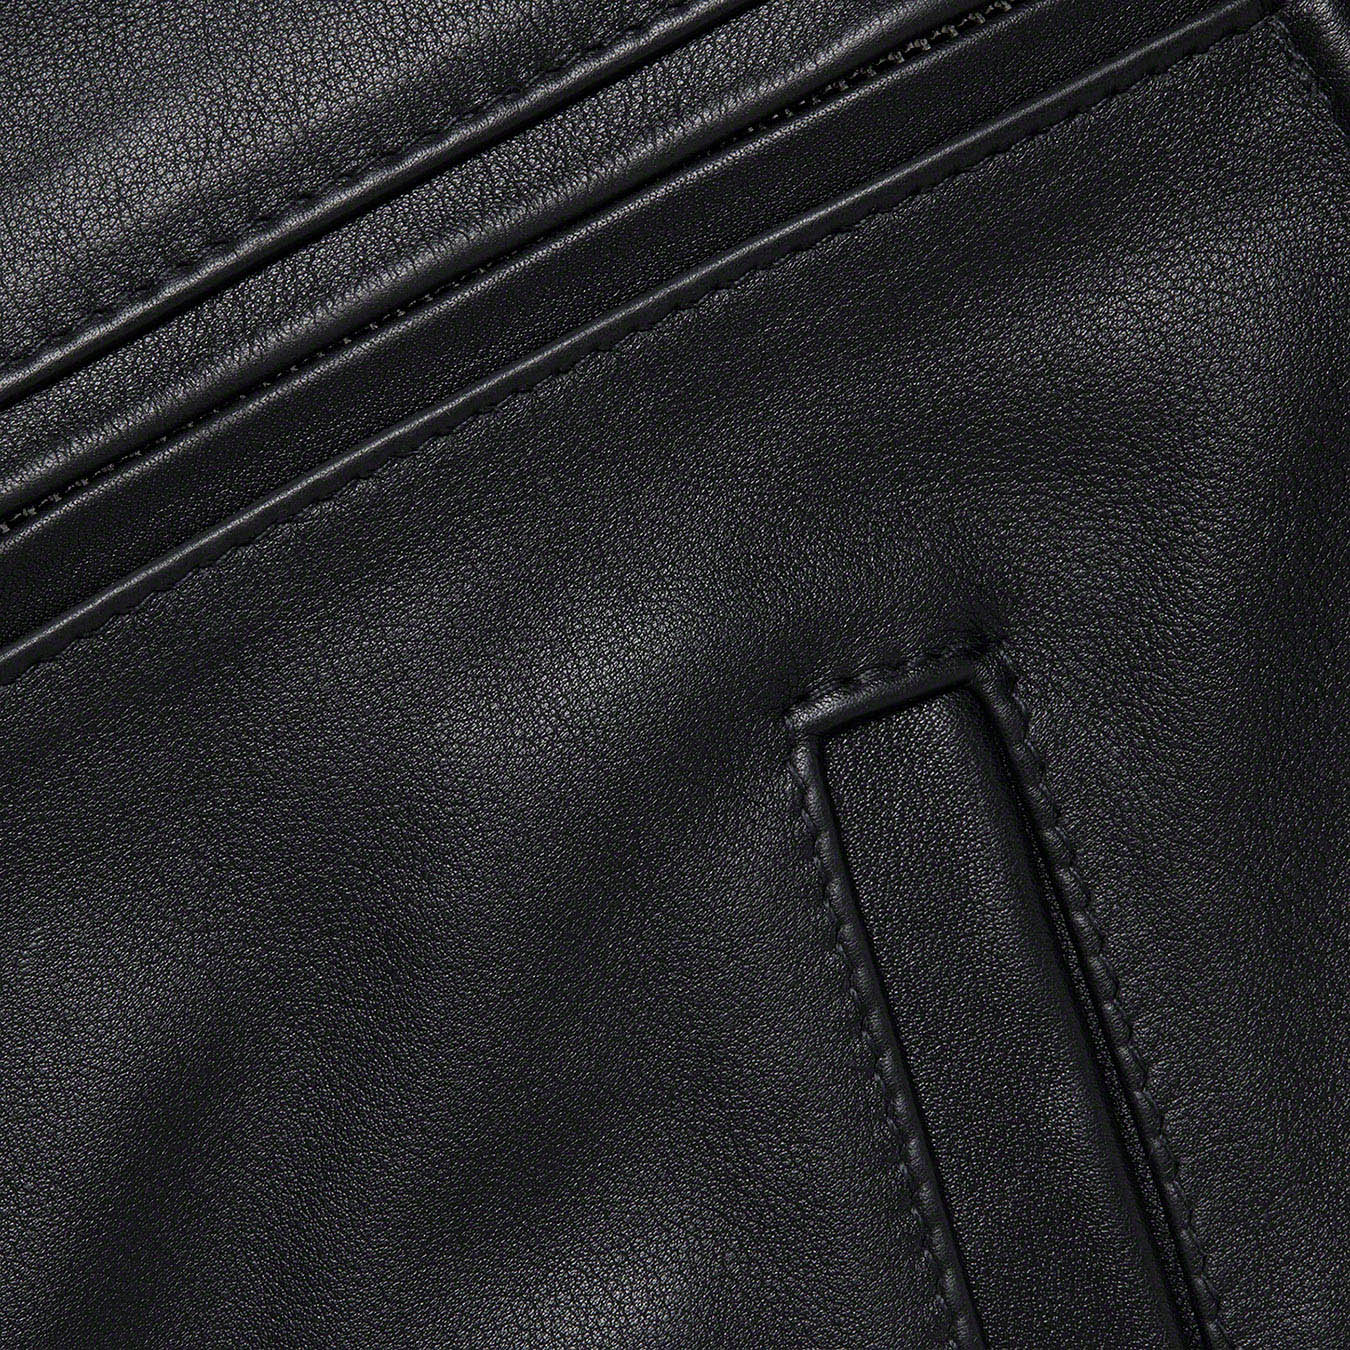 Supreme®/Schott® Leather Work Jacket | Supreme 21ss